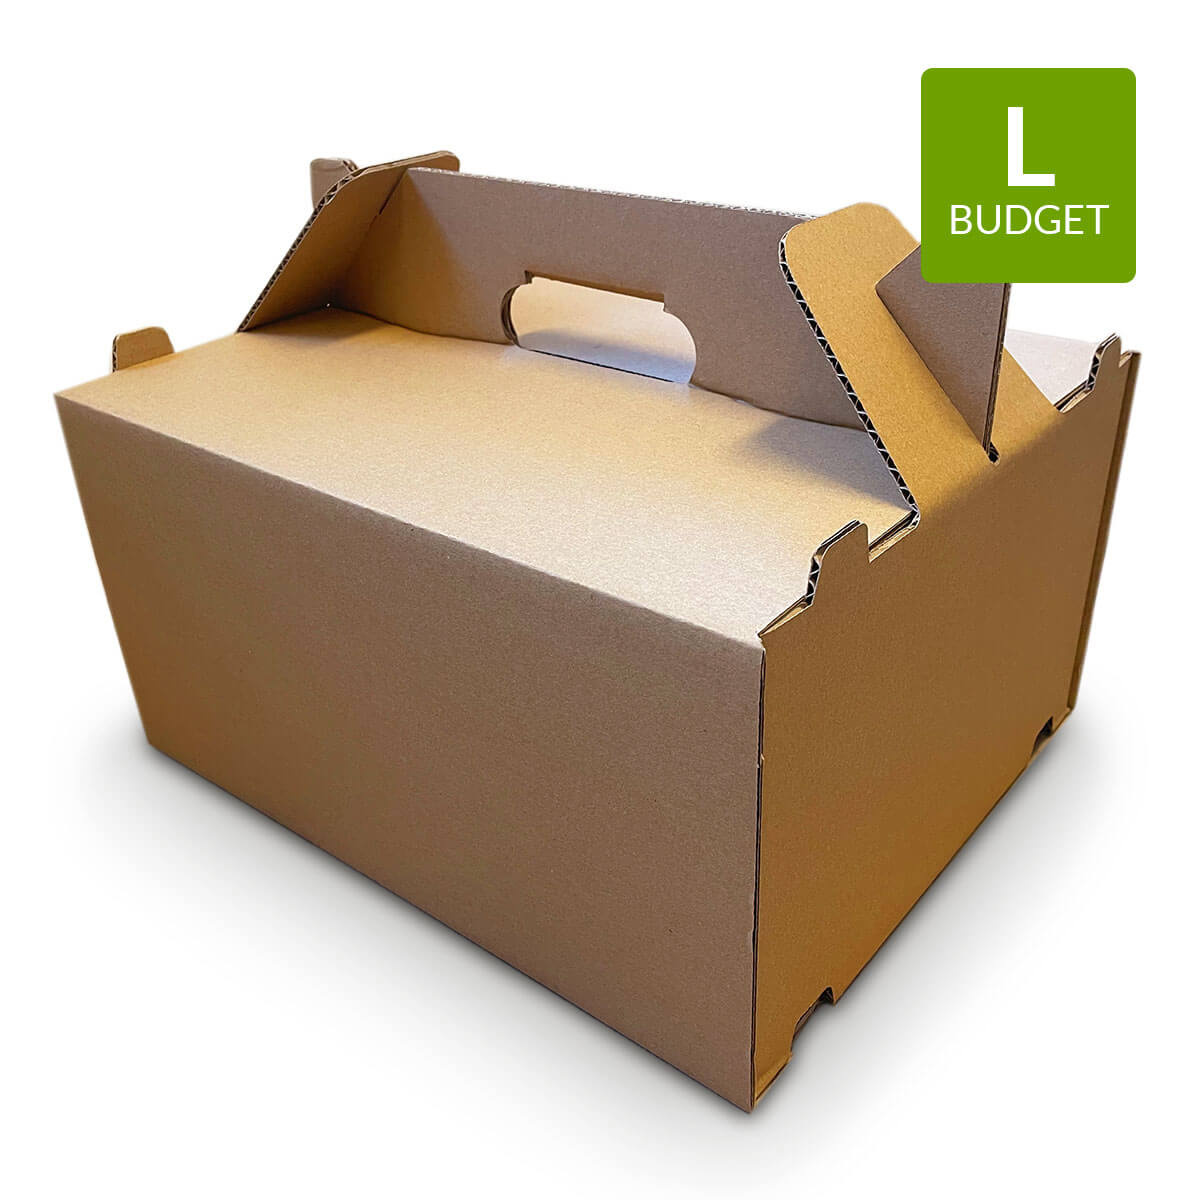 Partina City Filosofisch Gebakjes Budget take away box picknickmand van karton